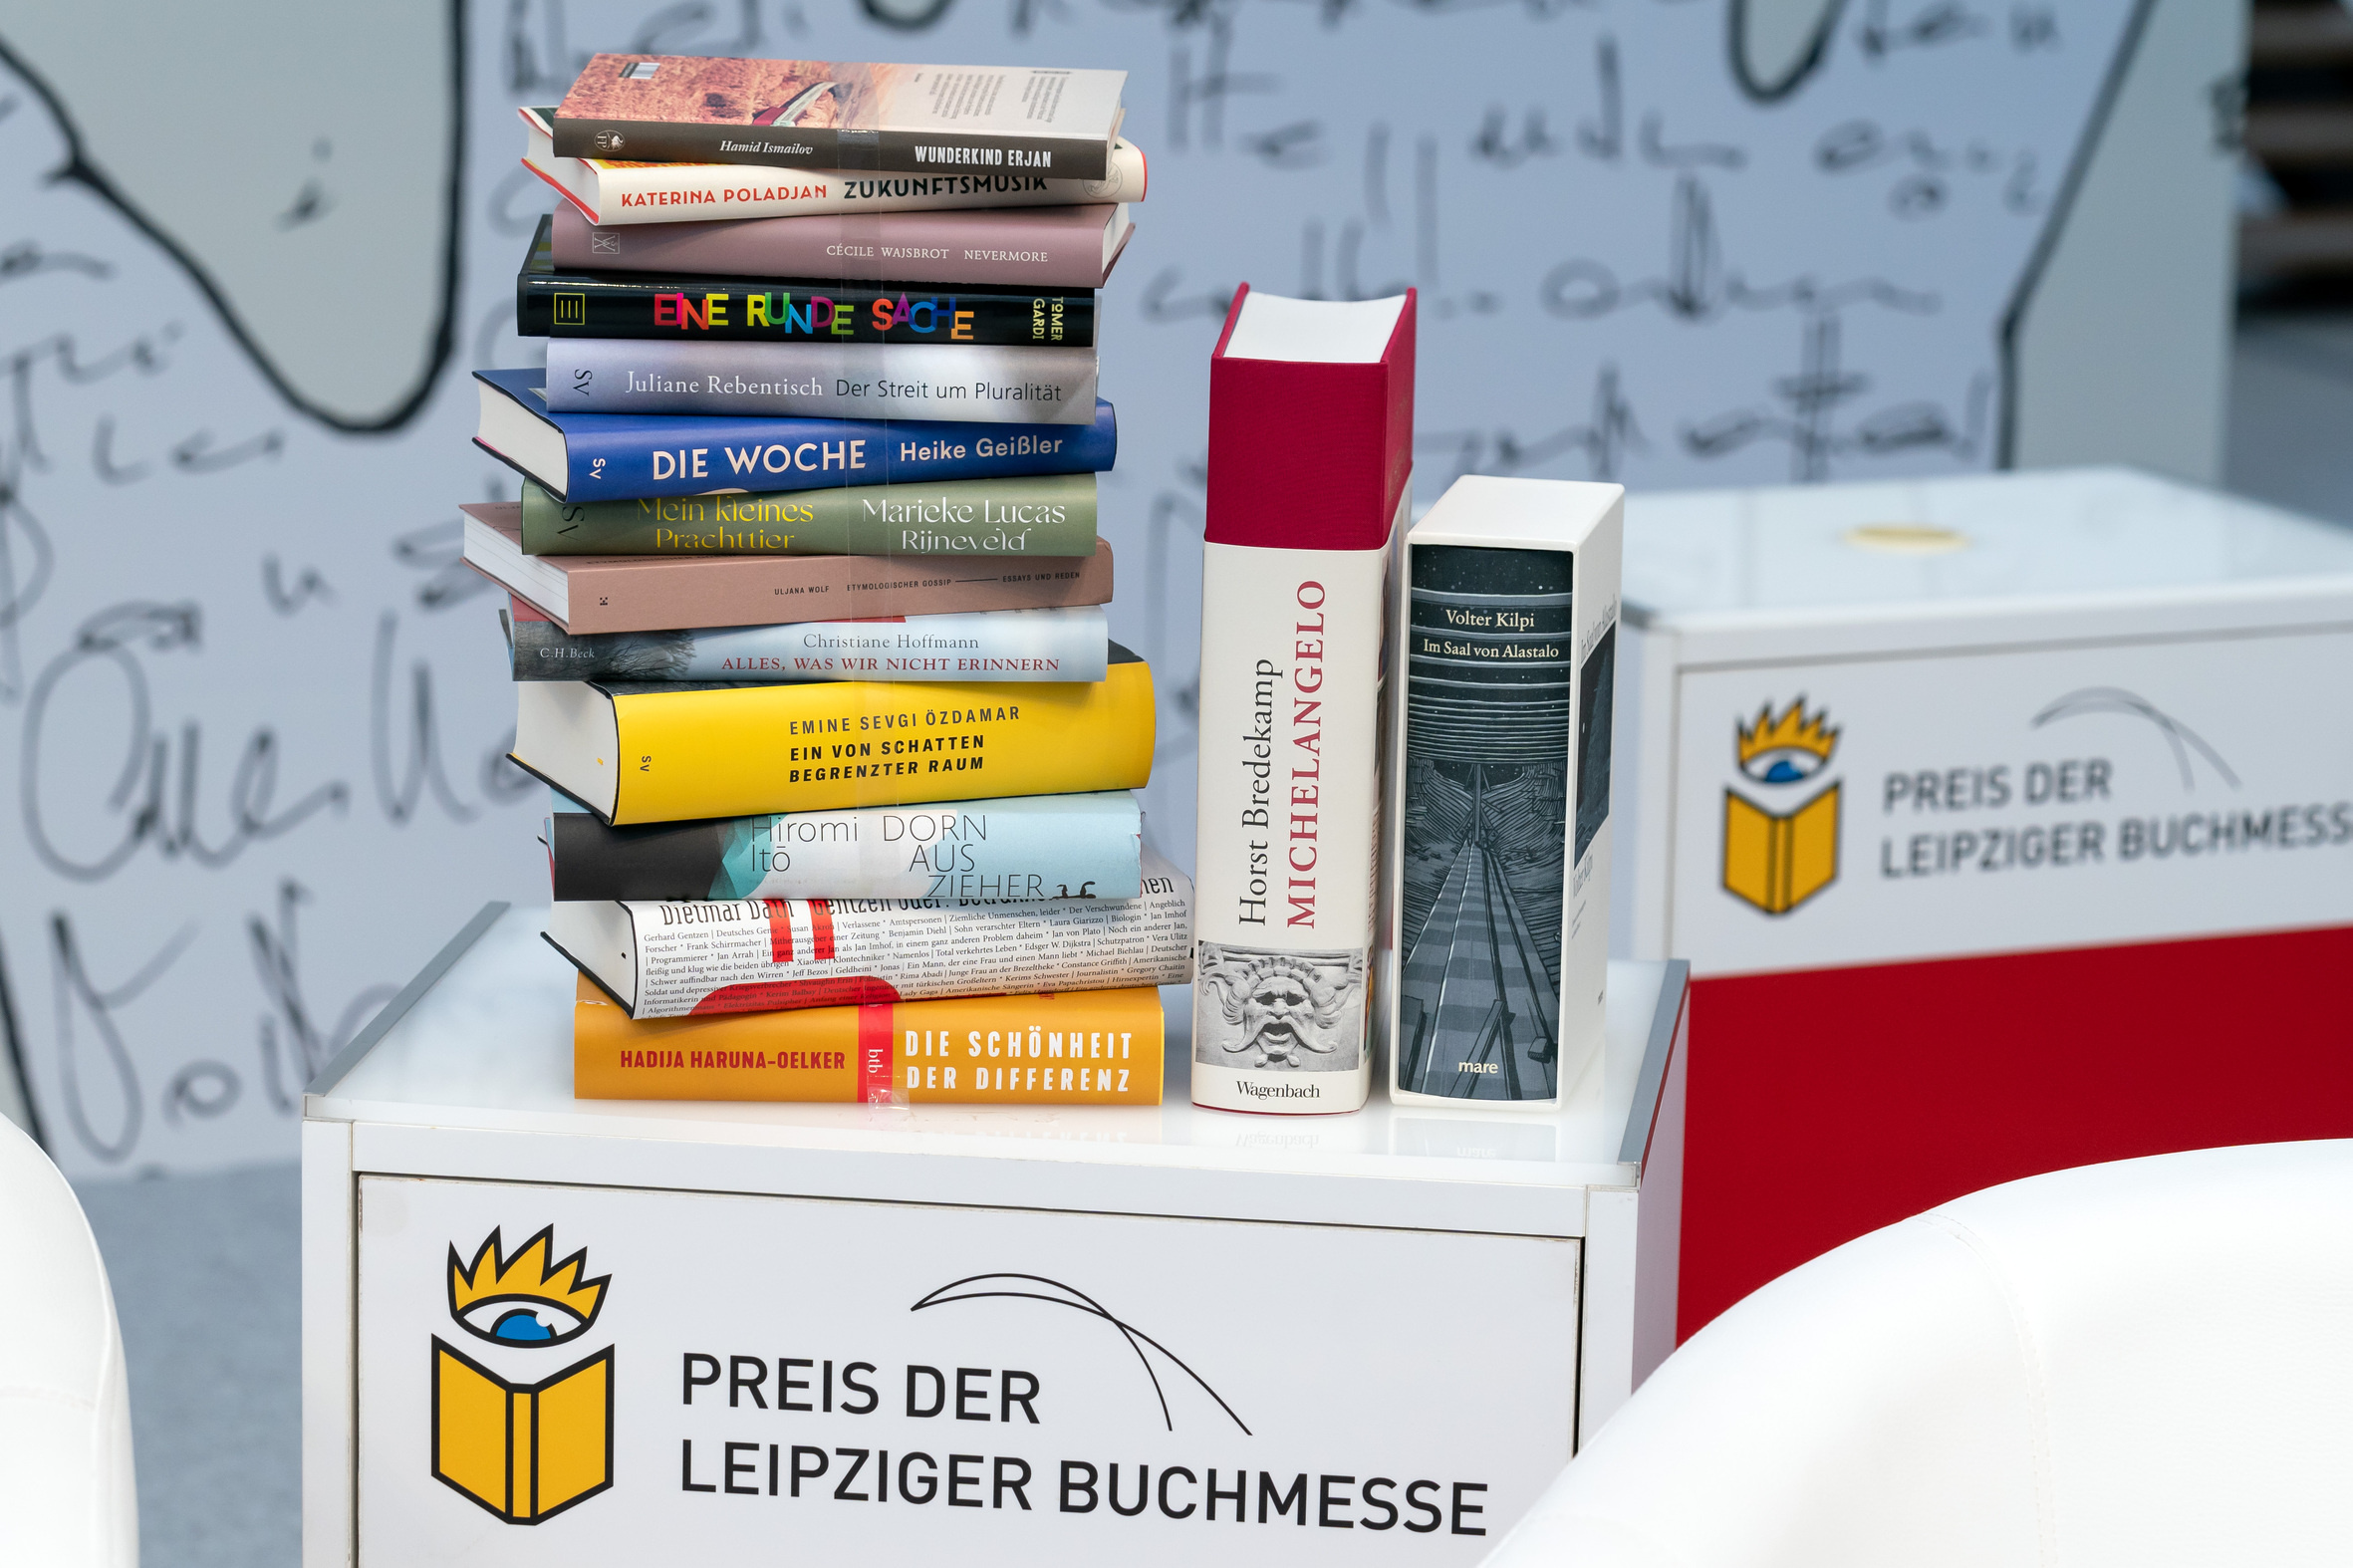 Leipzig book fair, Literary event, Book lovers, Publishing industry, 2370x1580 HD Desktop